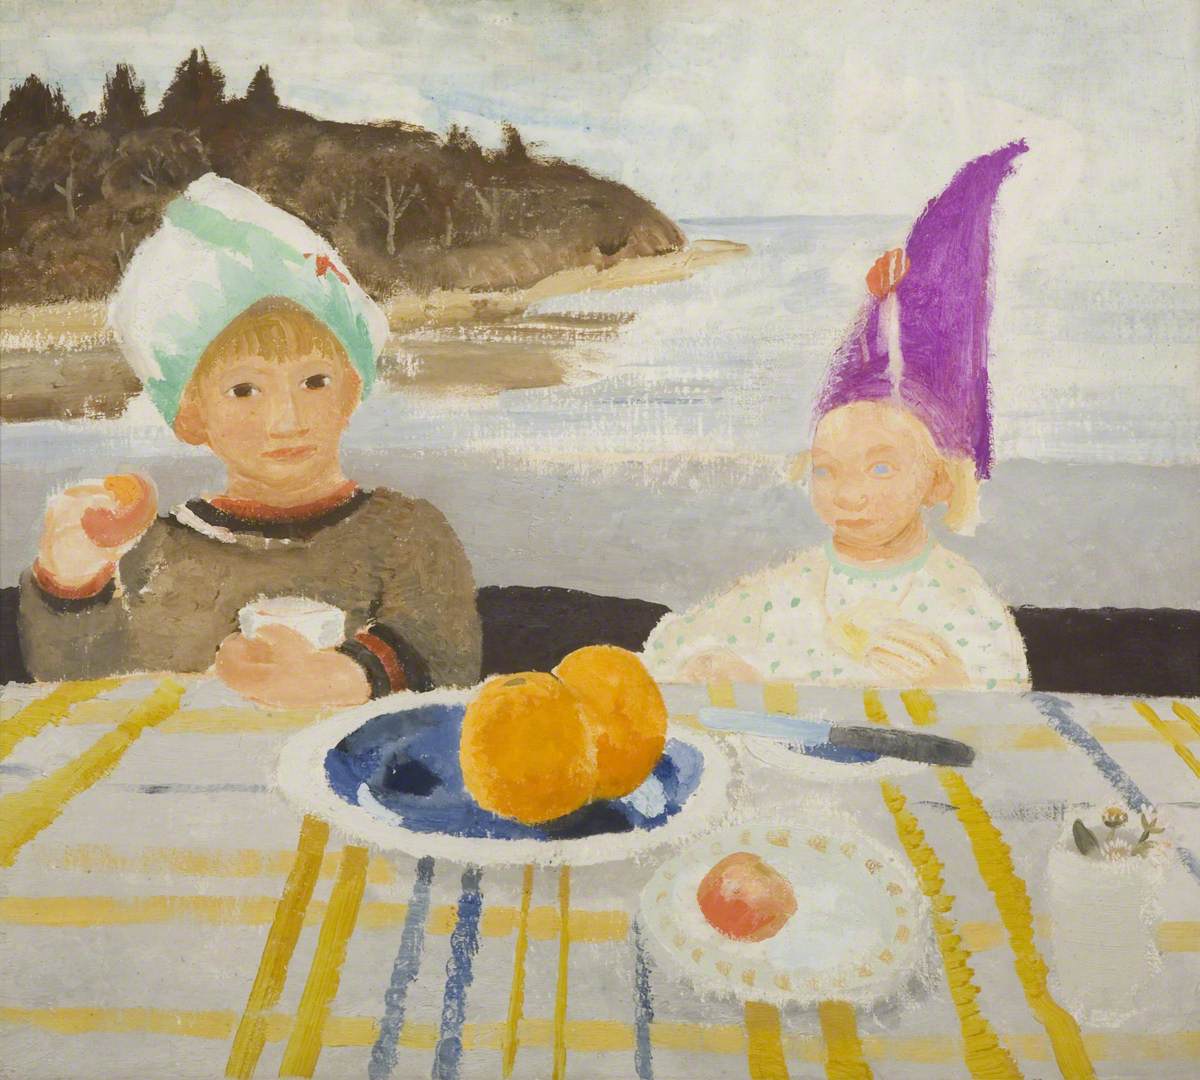 Image: Winifred Nicholson, The artist's children Kate and Jake, 1931-32